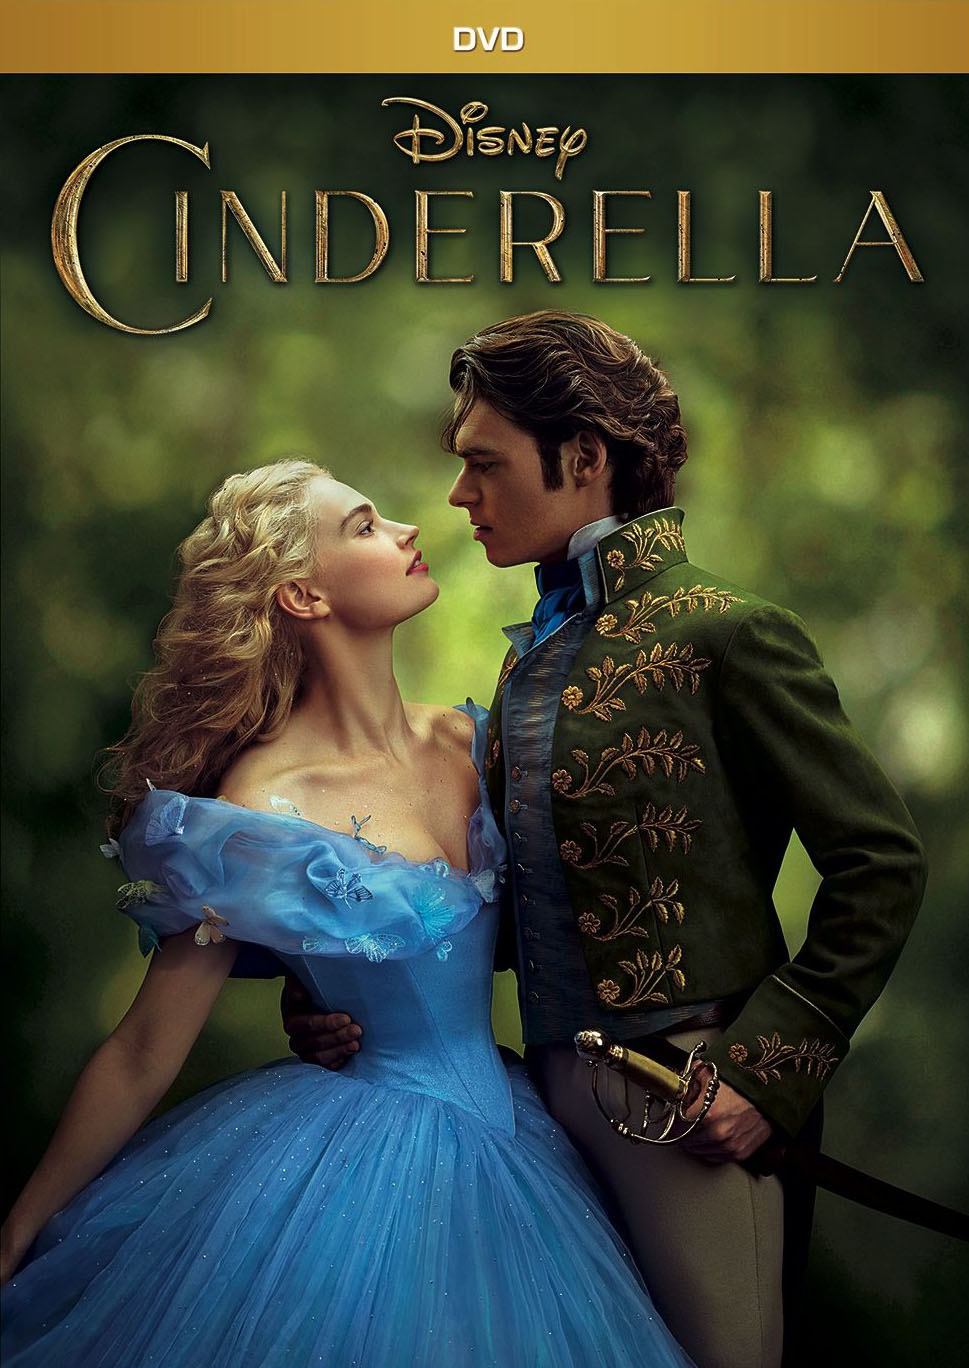 Cinderella [DVD] [2015] - Best Buy